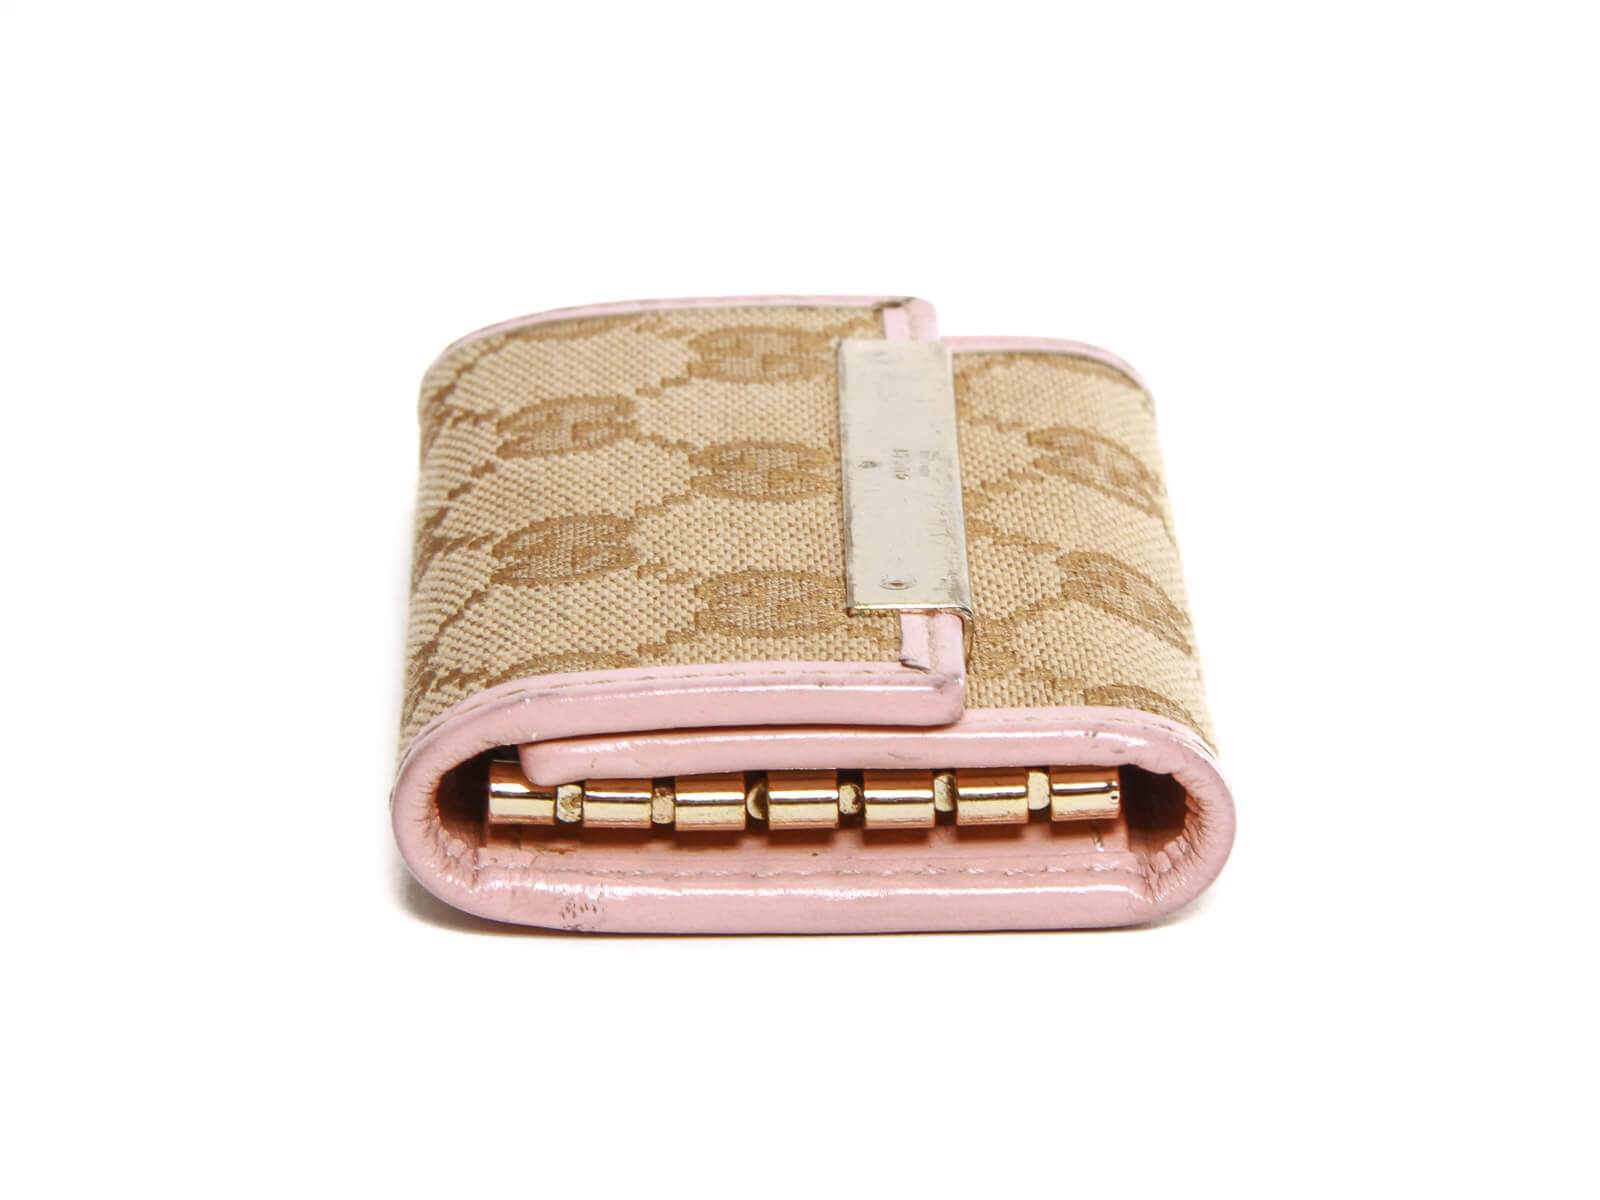 Gucci Key Wallet